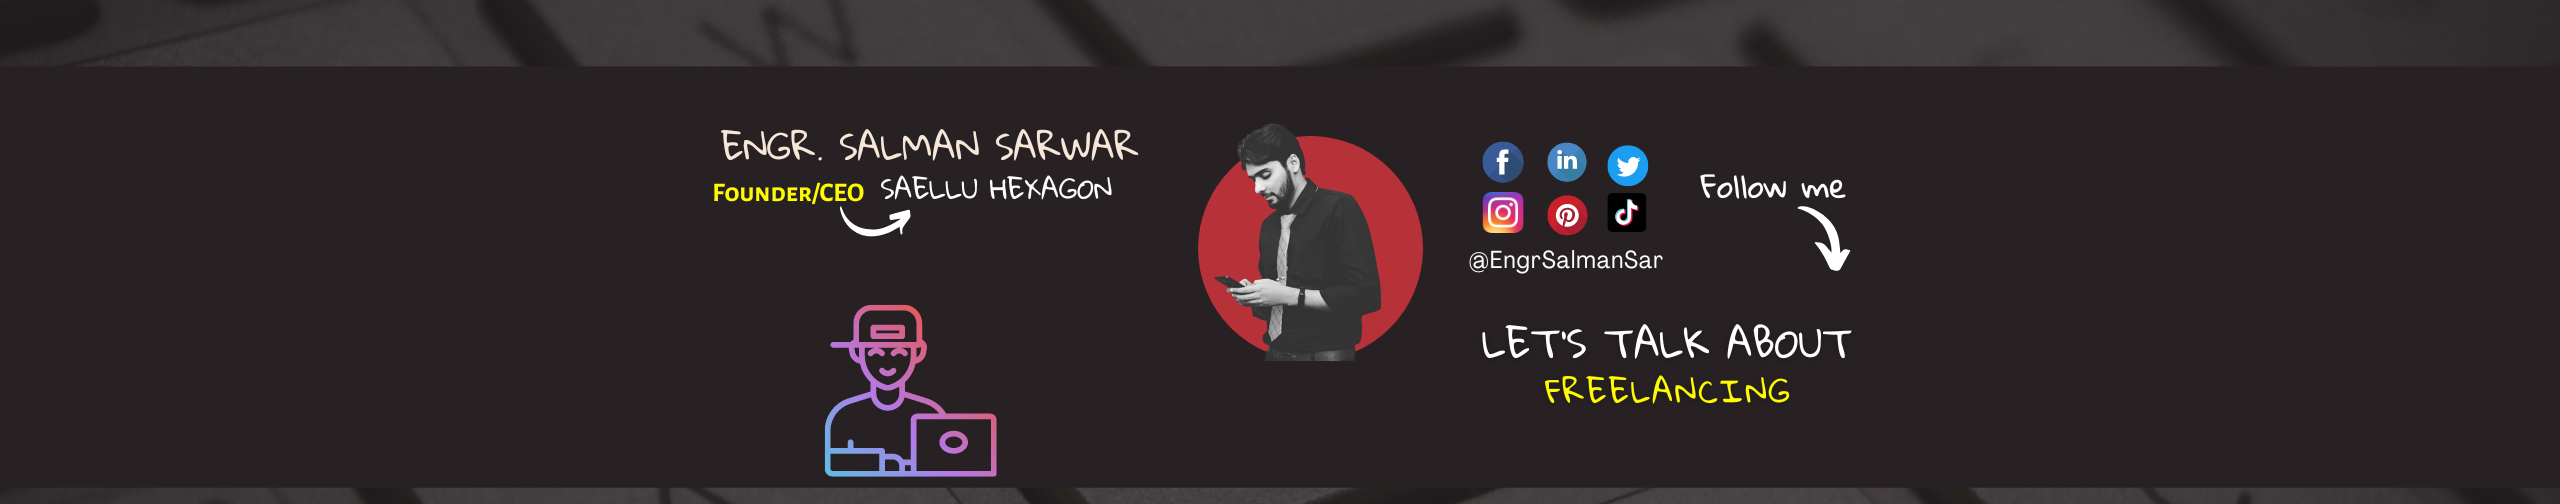 Engr Salman Sarwar's profile banner